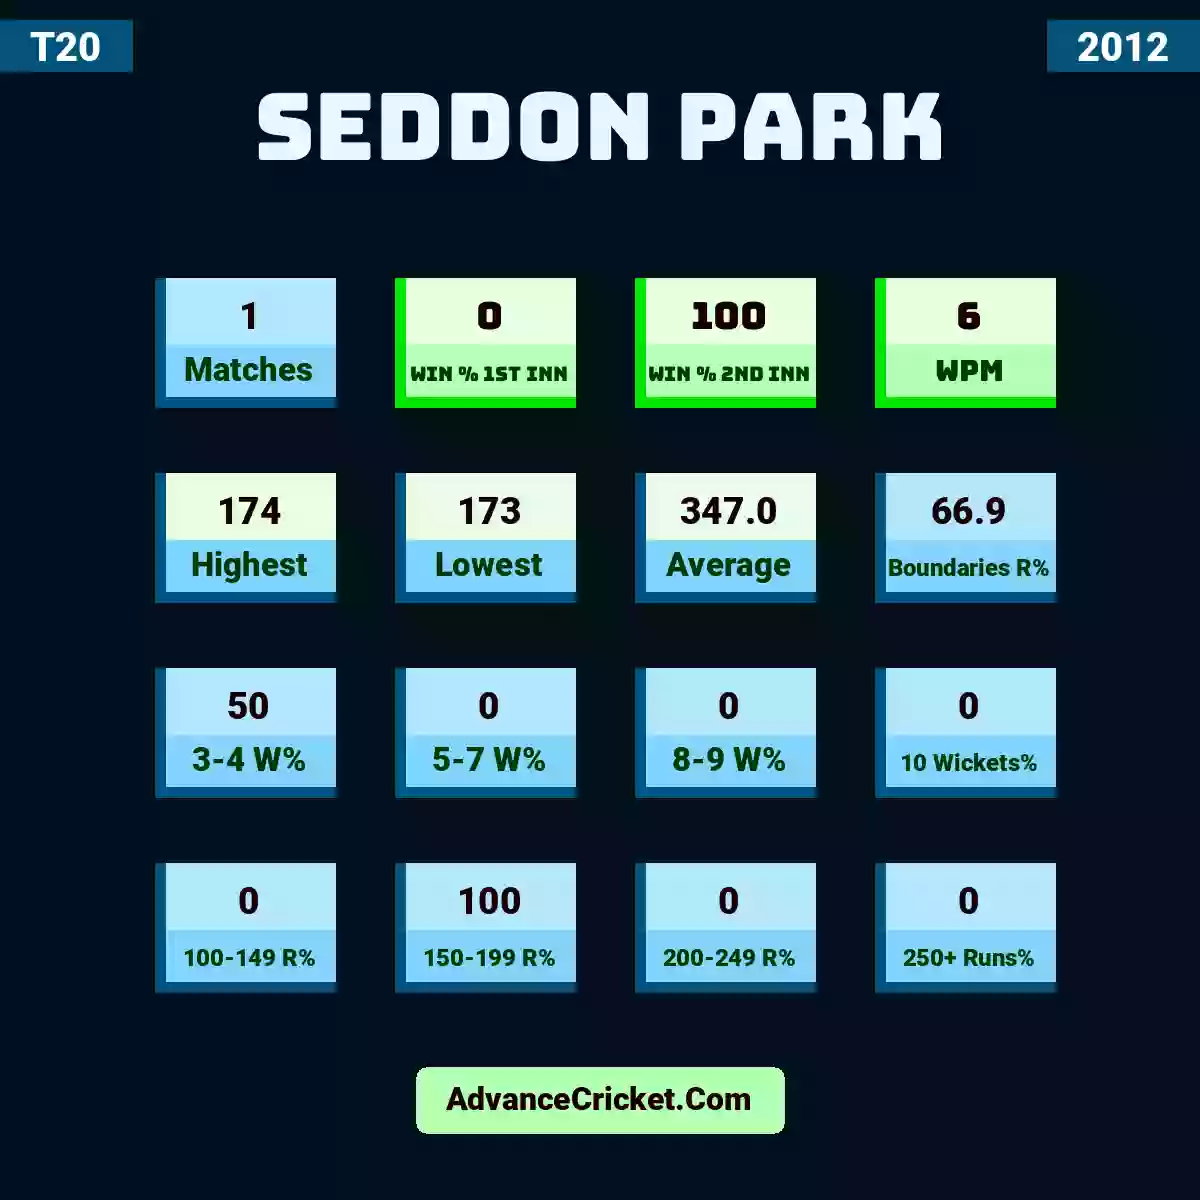 Image showing Seddon Park with Matches: 1, Win % 1st Inn: 0, Win % 2nd Inn: 100, WPM: 6, Highest: 174, Lowest: 173, Average: 347.0, Boundaries R%: 66.9, 3-4 W%: 50, 5-7 W%: 0, 8-9 W%: 0, 10 Wickets%: 0, 100-149 R%: 0, 150-199 R%: 100, 200-249 R%: 0, 250+ Runs%: 0.